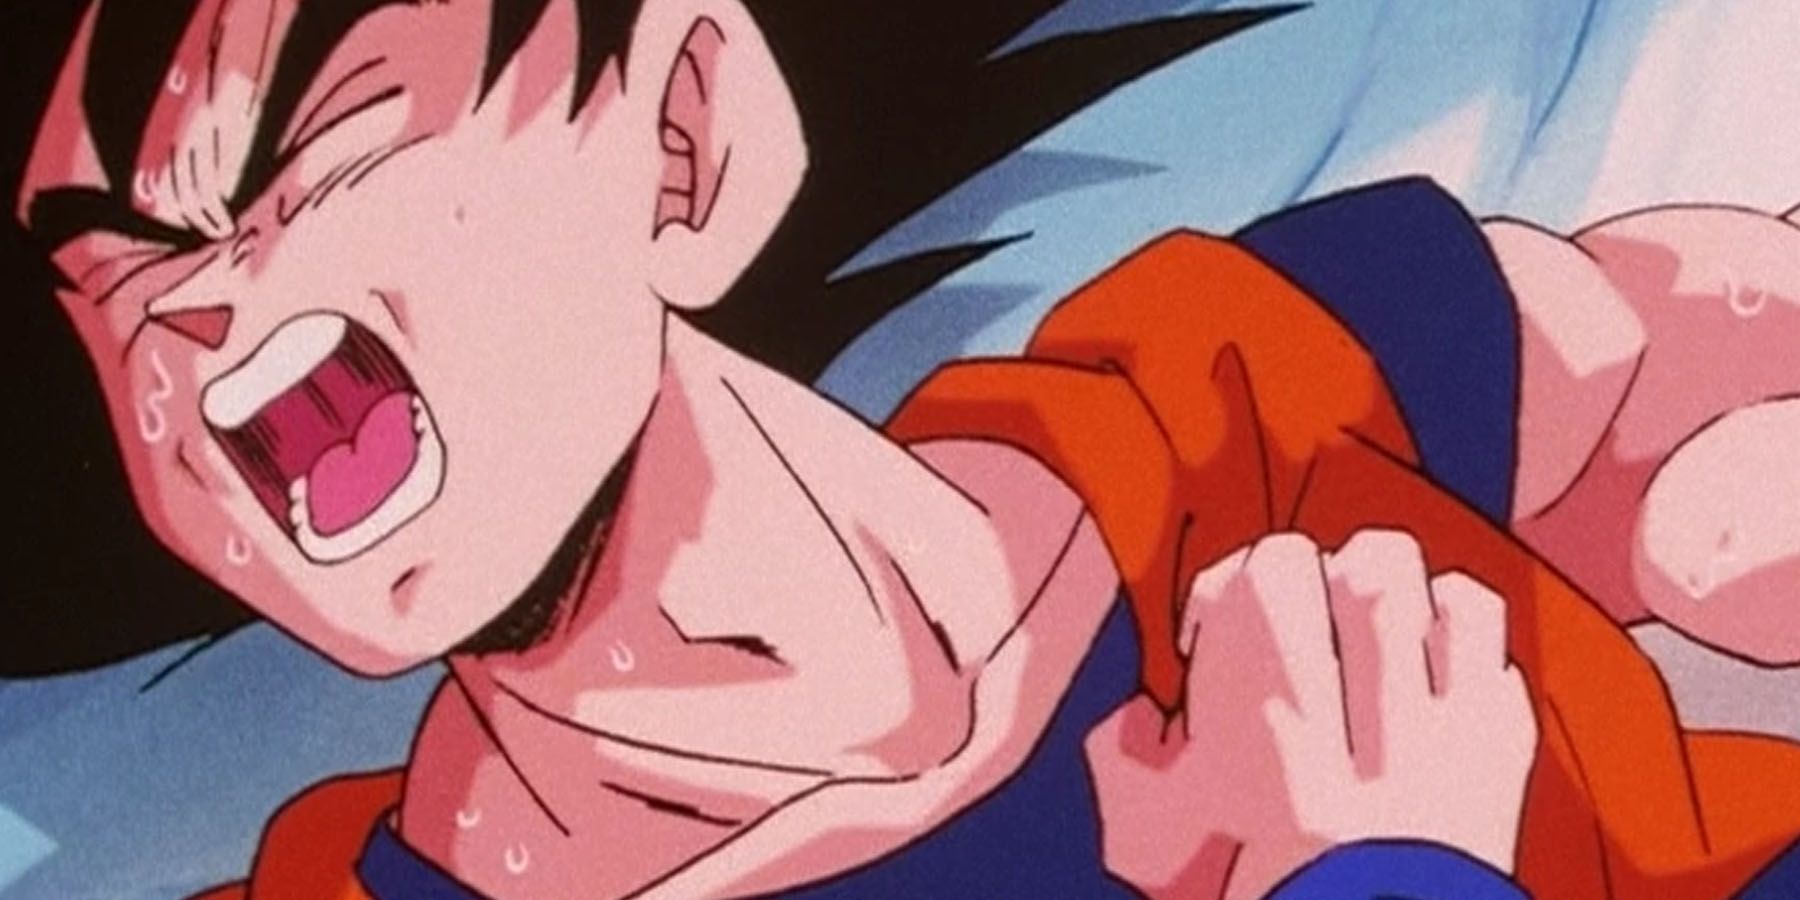 Goku being sick